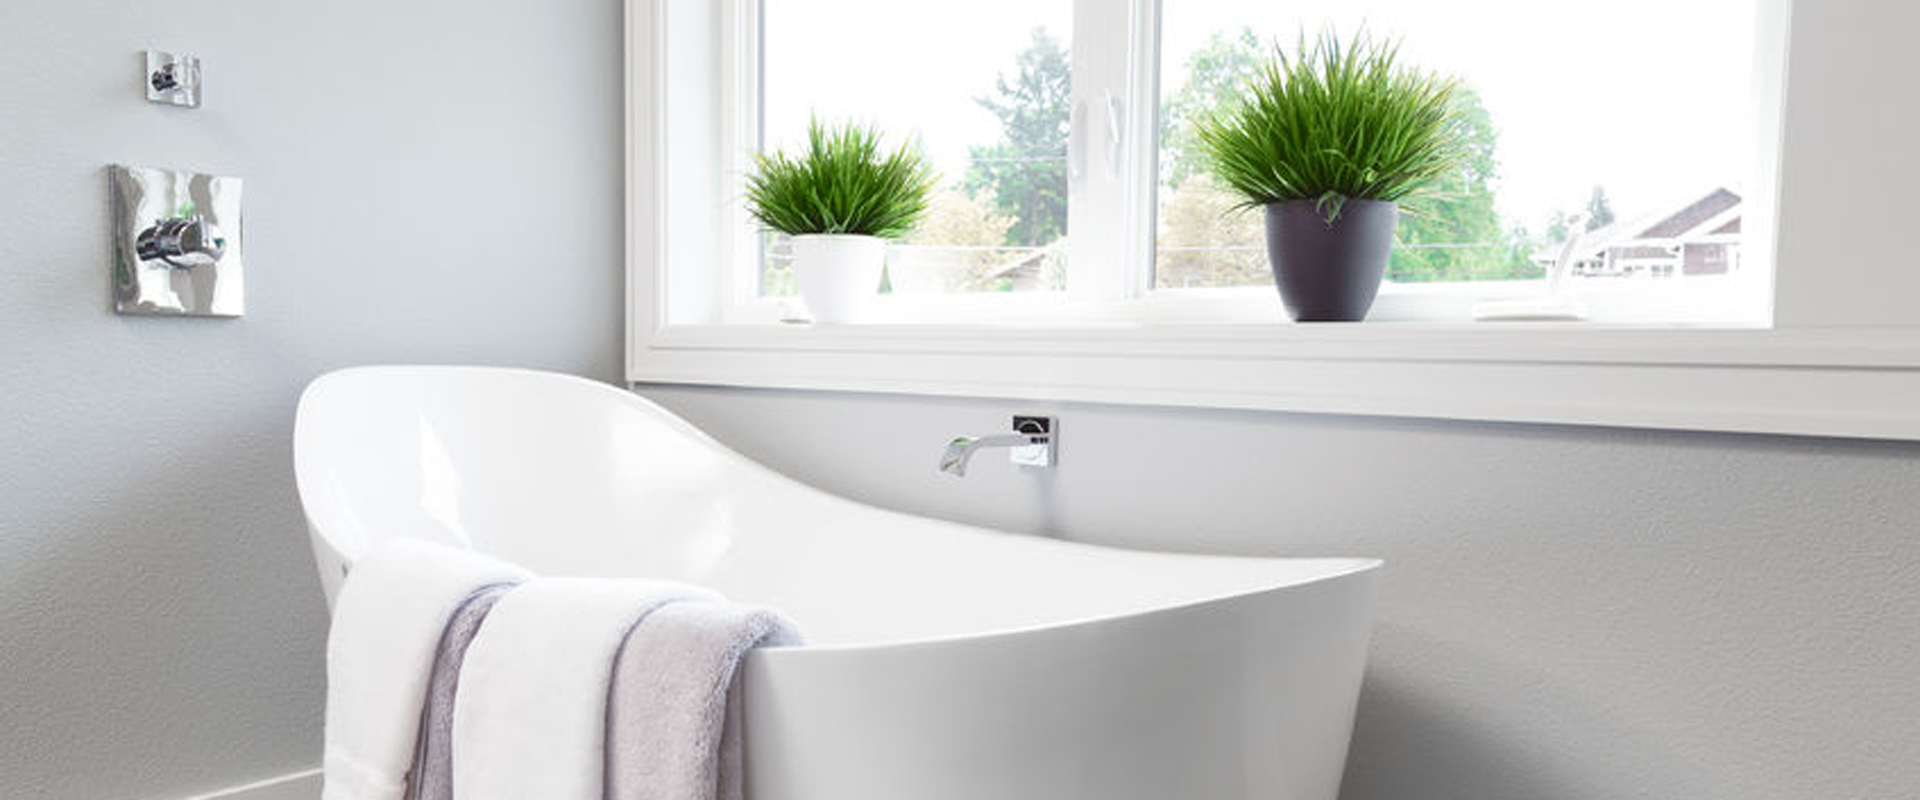 47839649 - bathtub in master bathroom in new luxury home